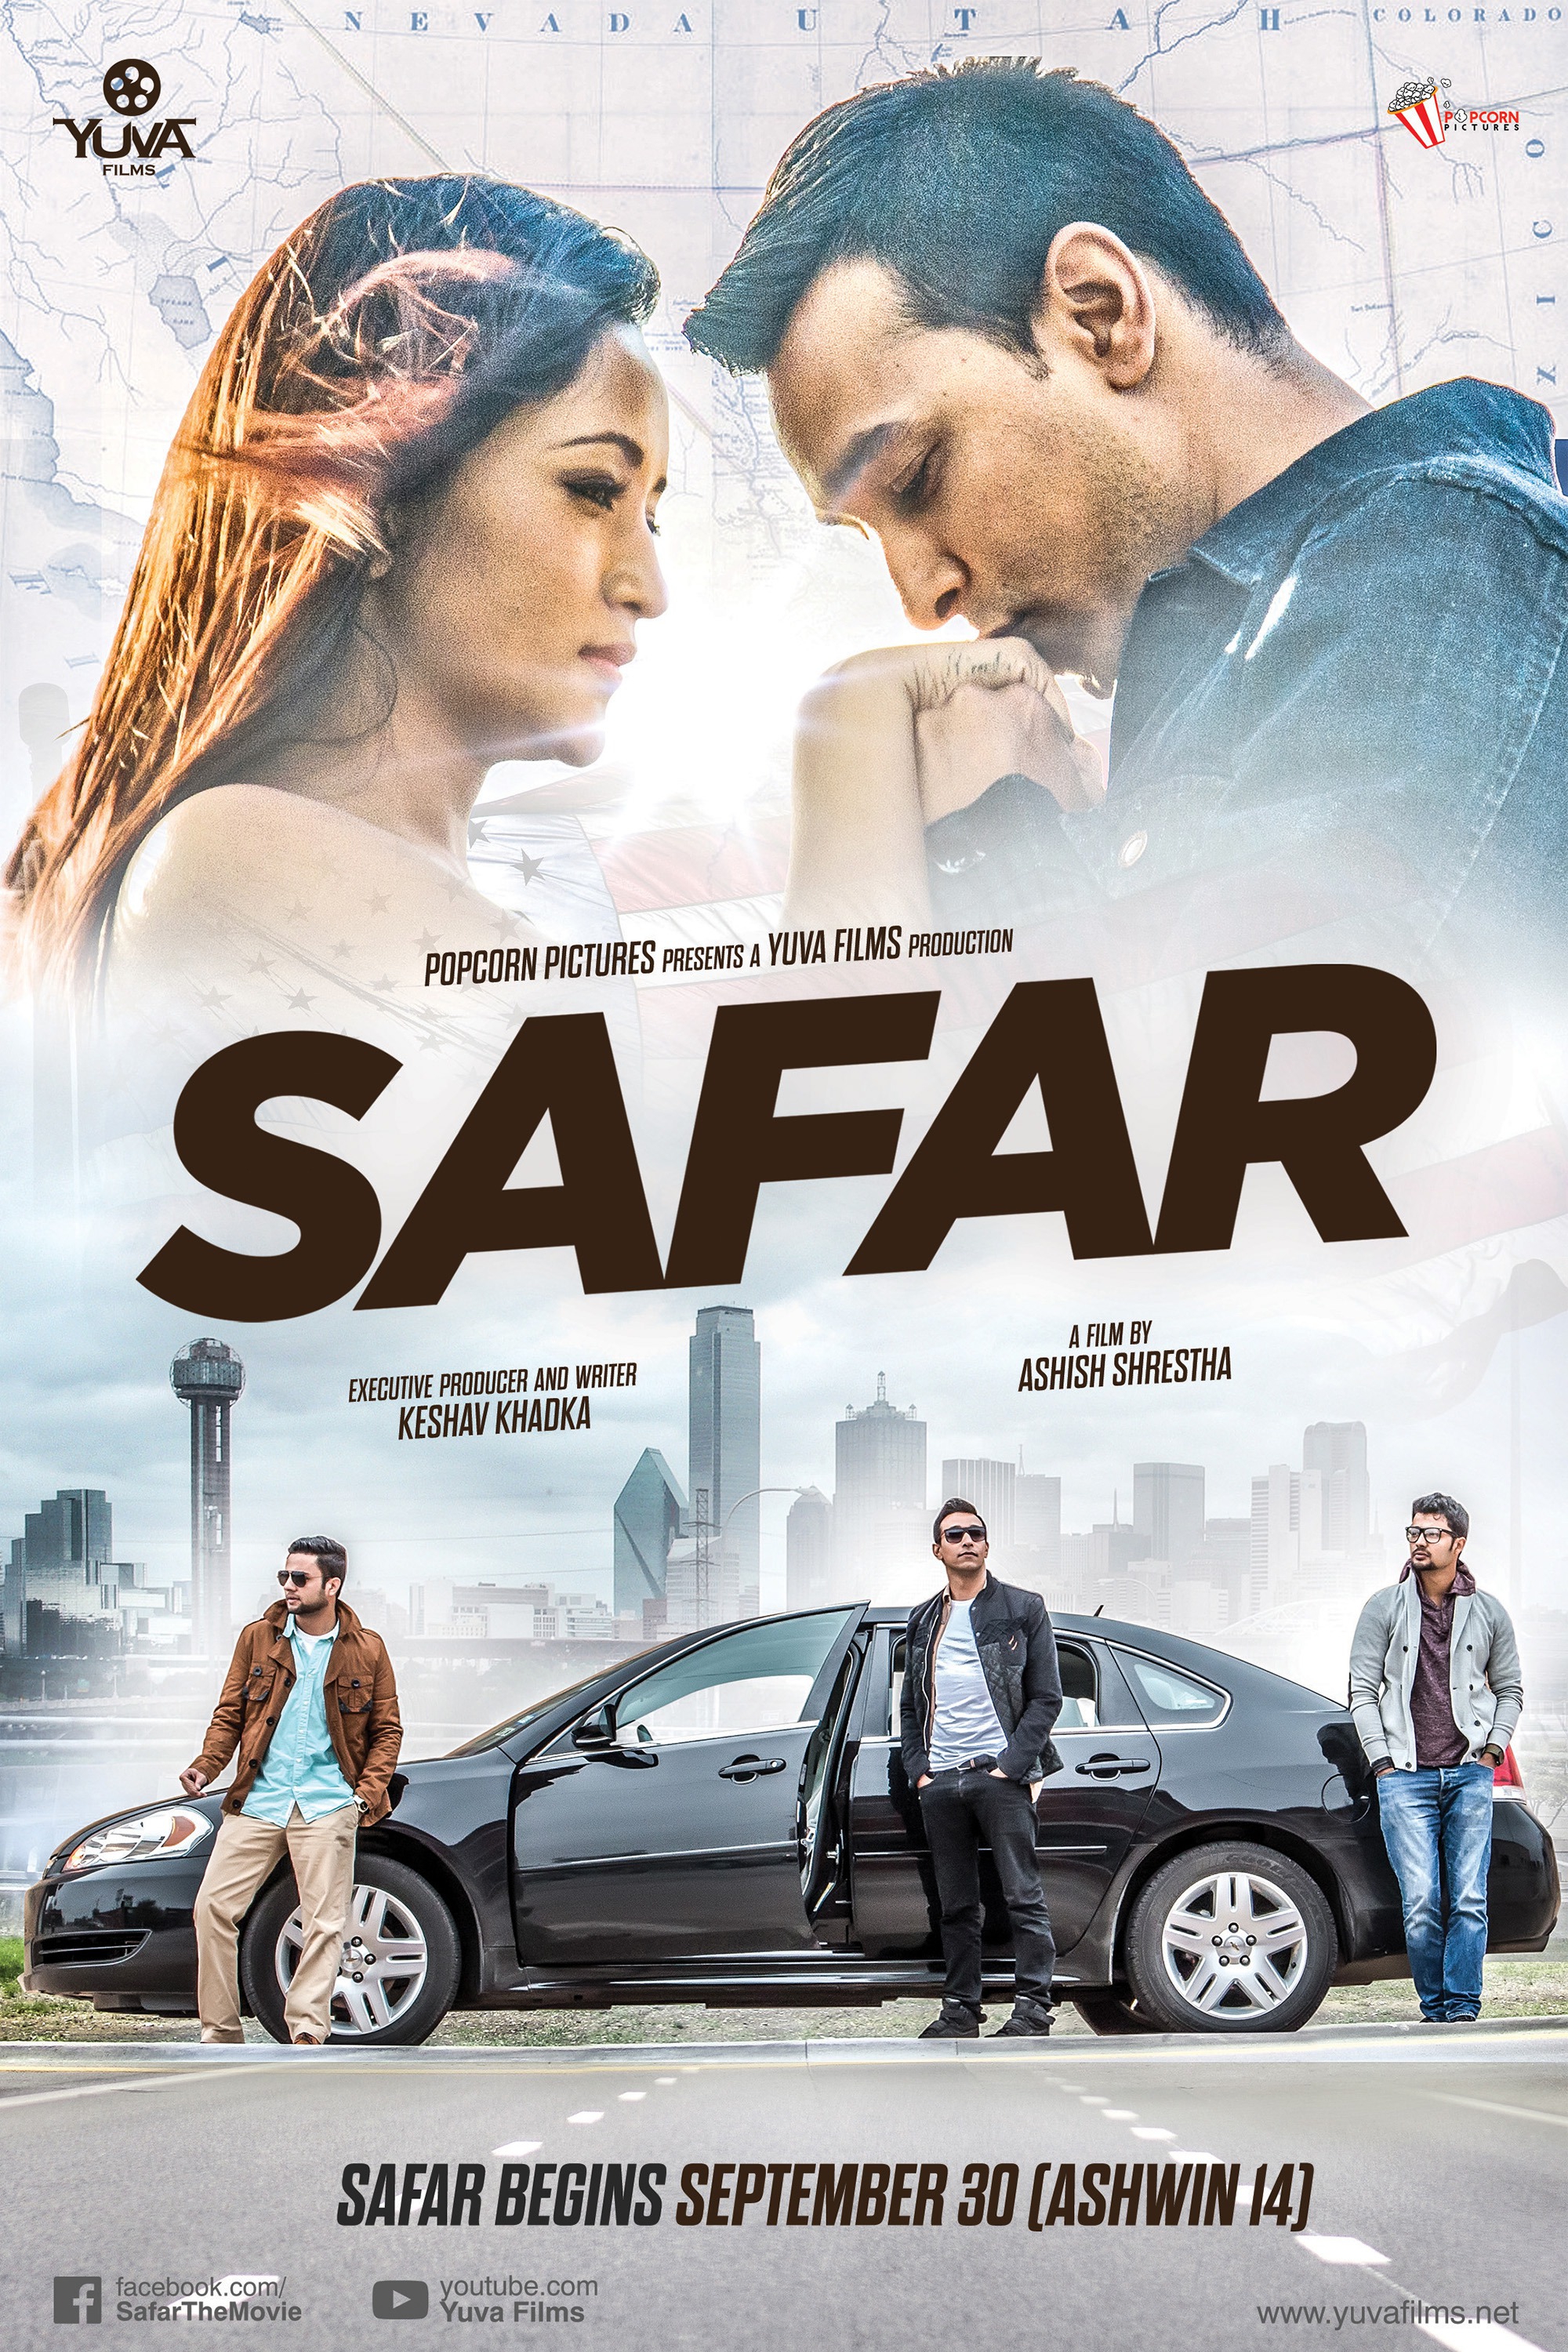 Mega Sized Movie Poster Image for Safar (#4 of 5)